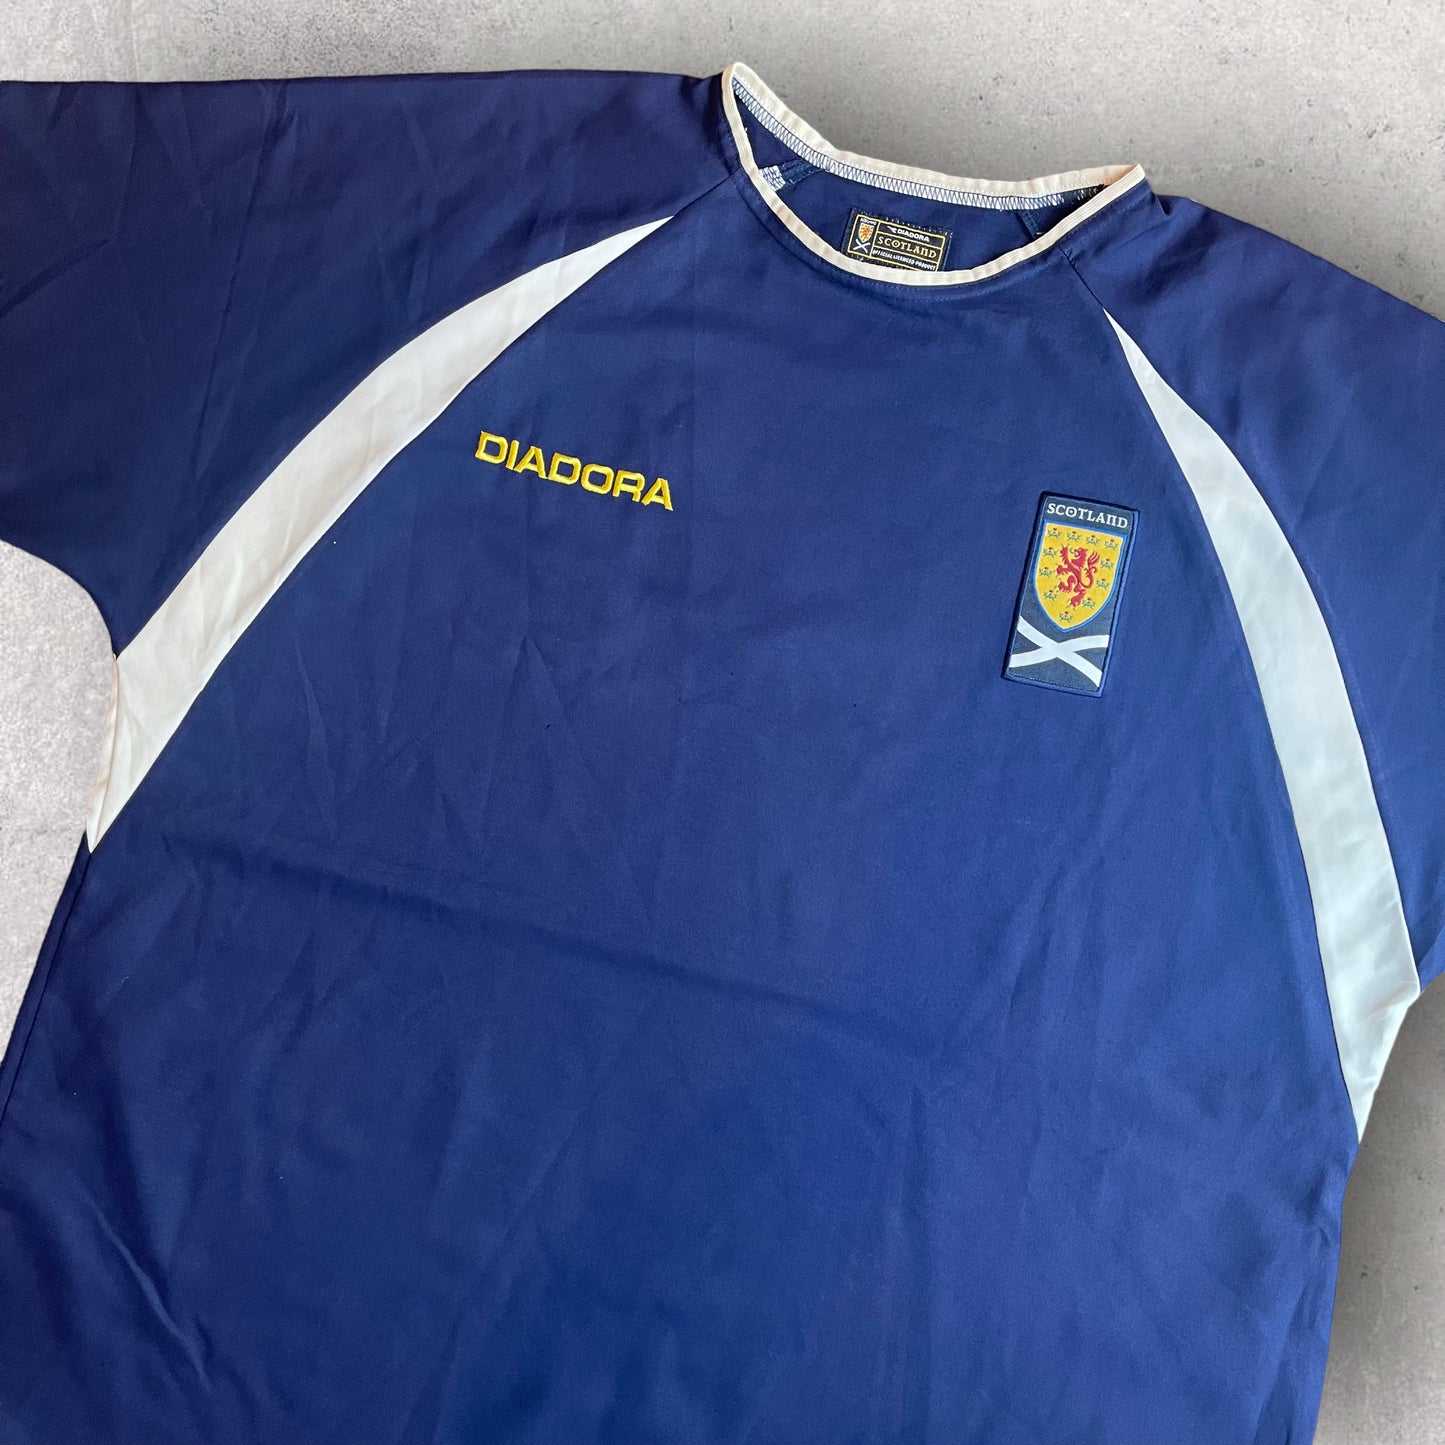 Retro Diadora Scotland National Football Jersey - Large